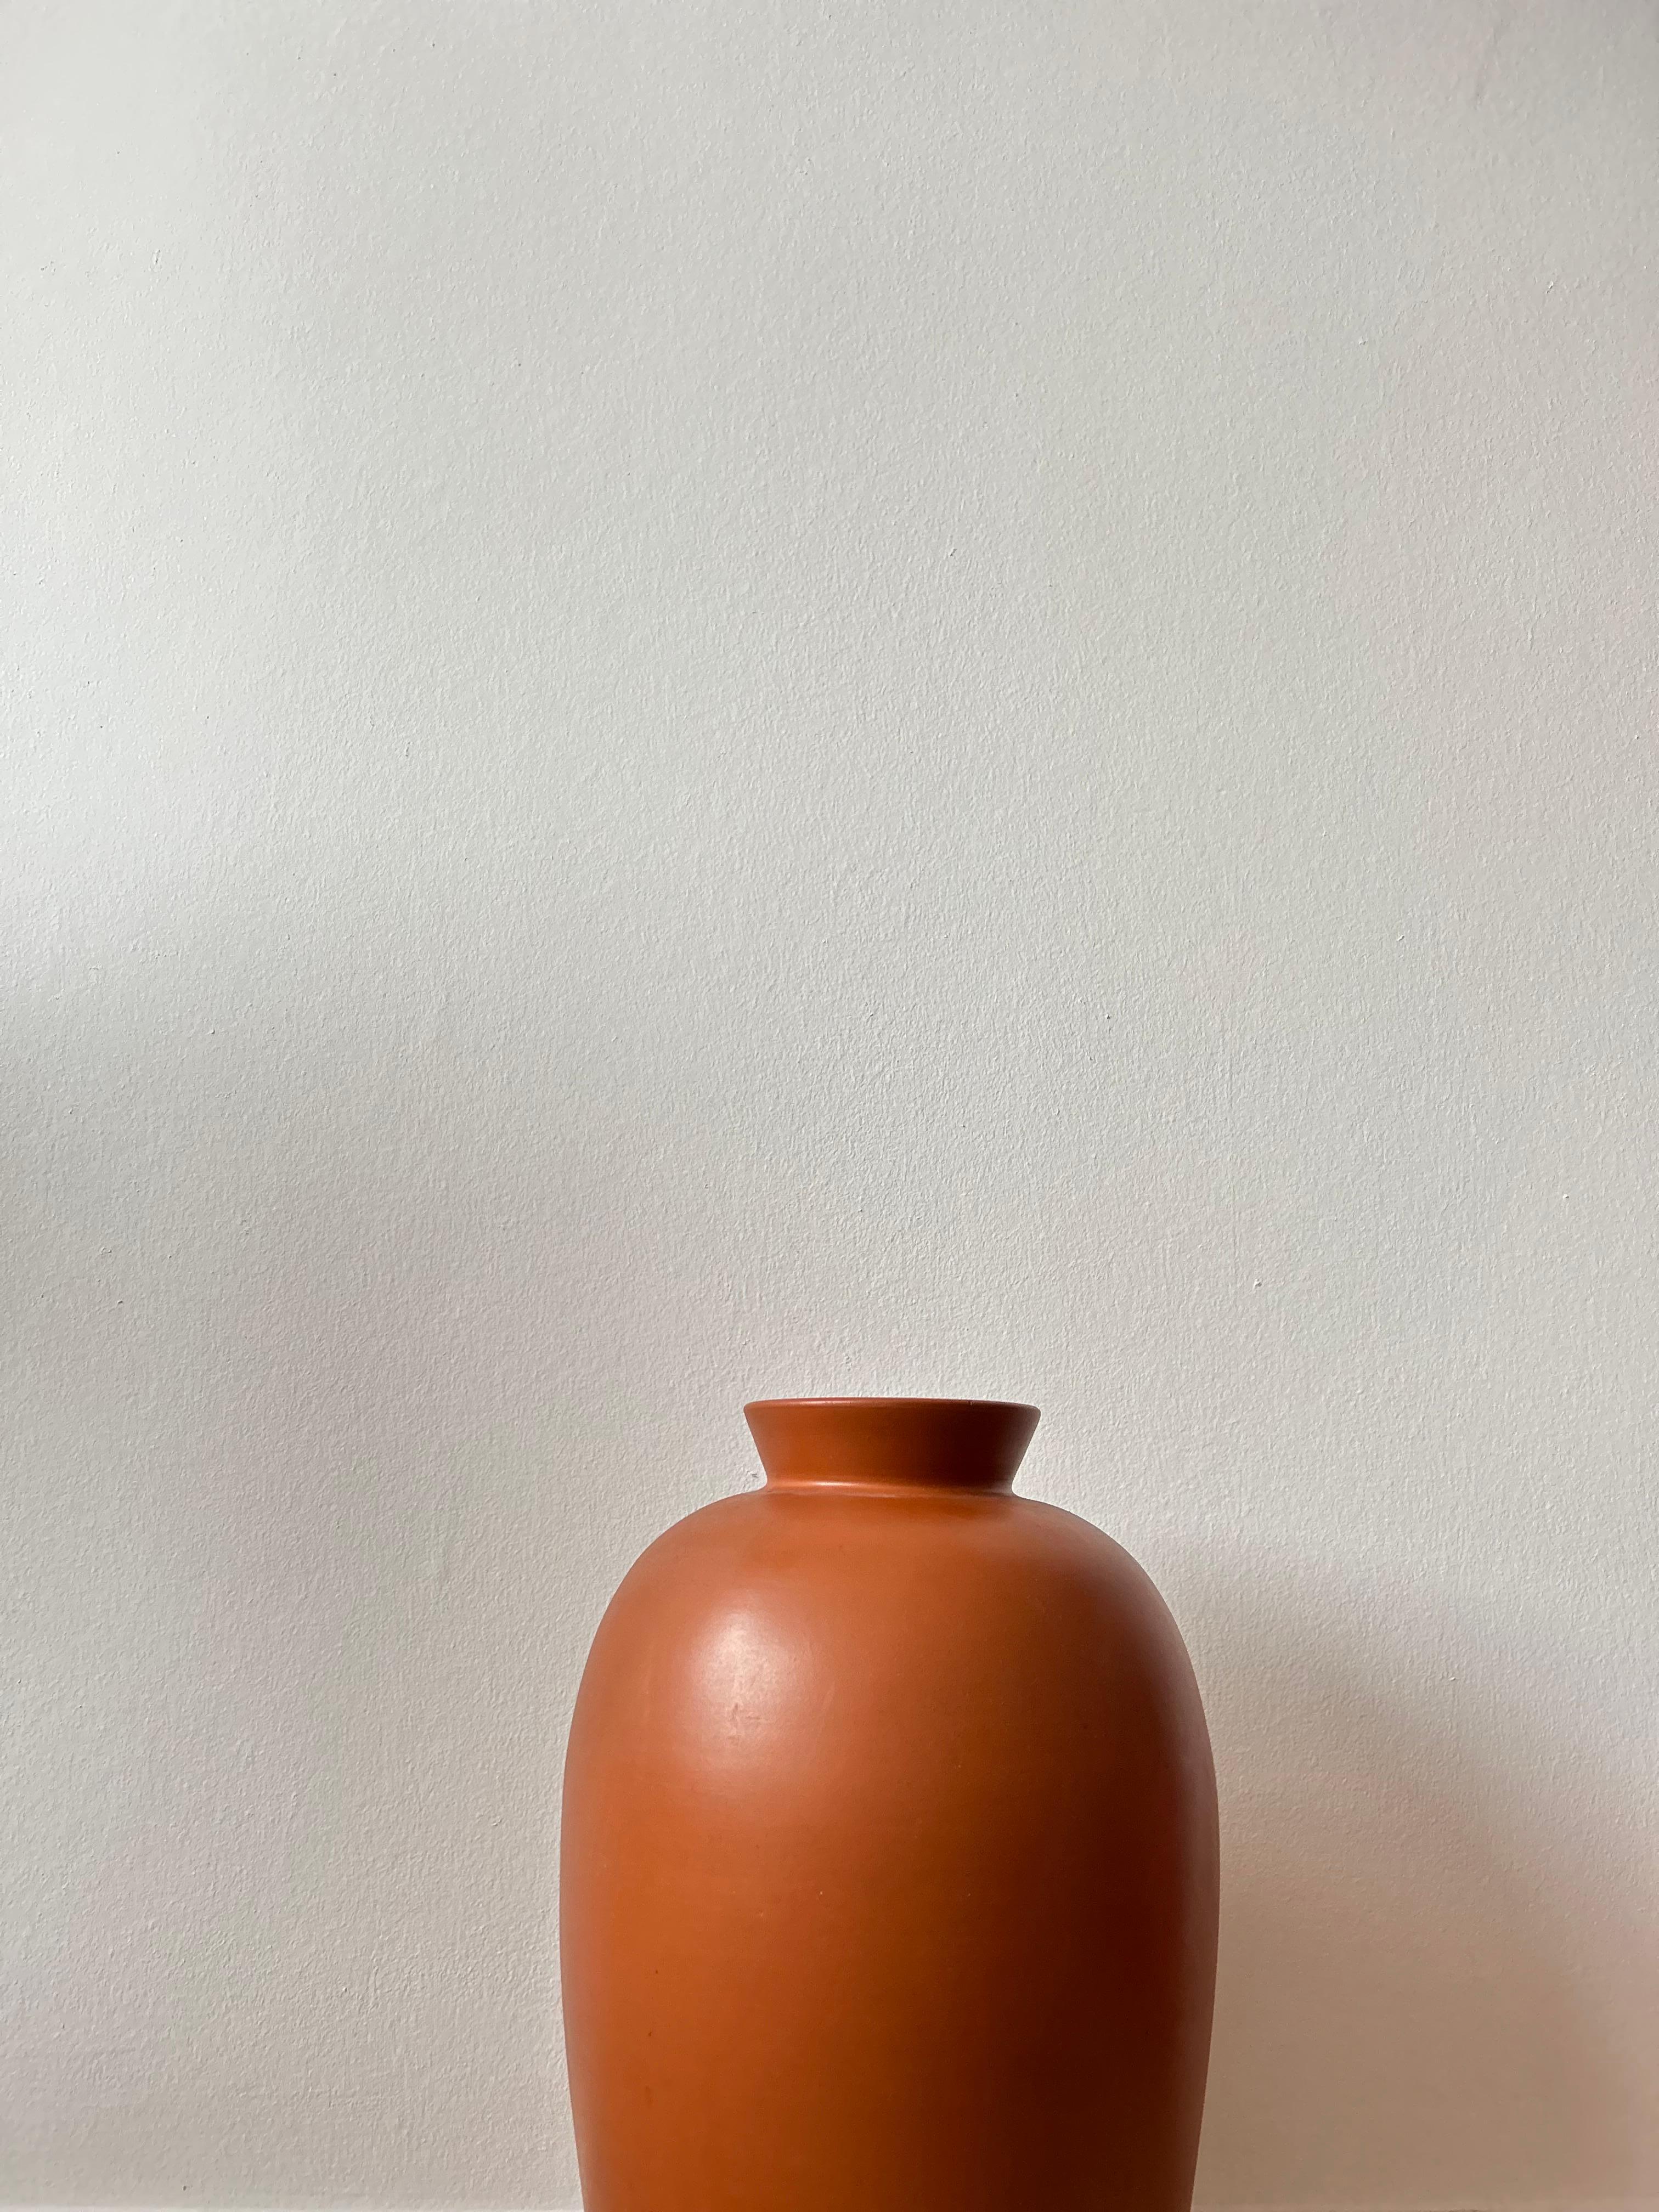 Swedish Decorative Floor Vase in Warm Tones by Upsala Ekeby, Sweden 1960’s For Sale